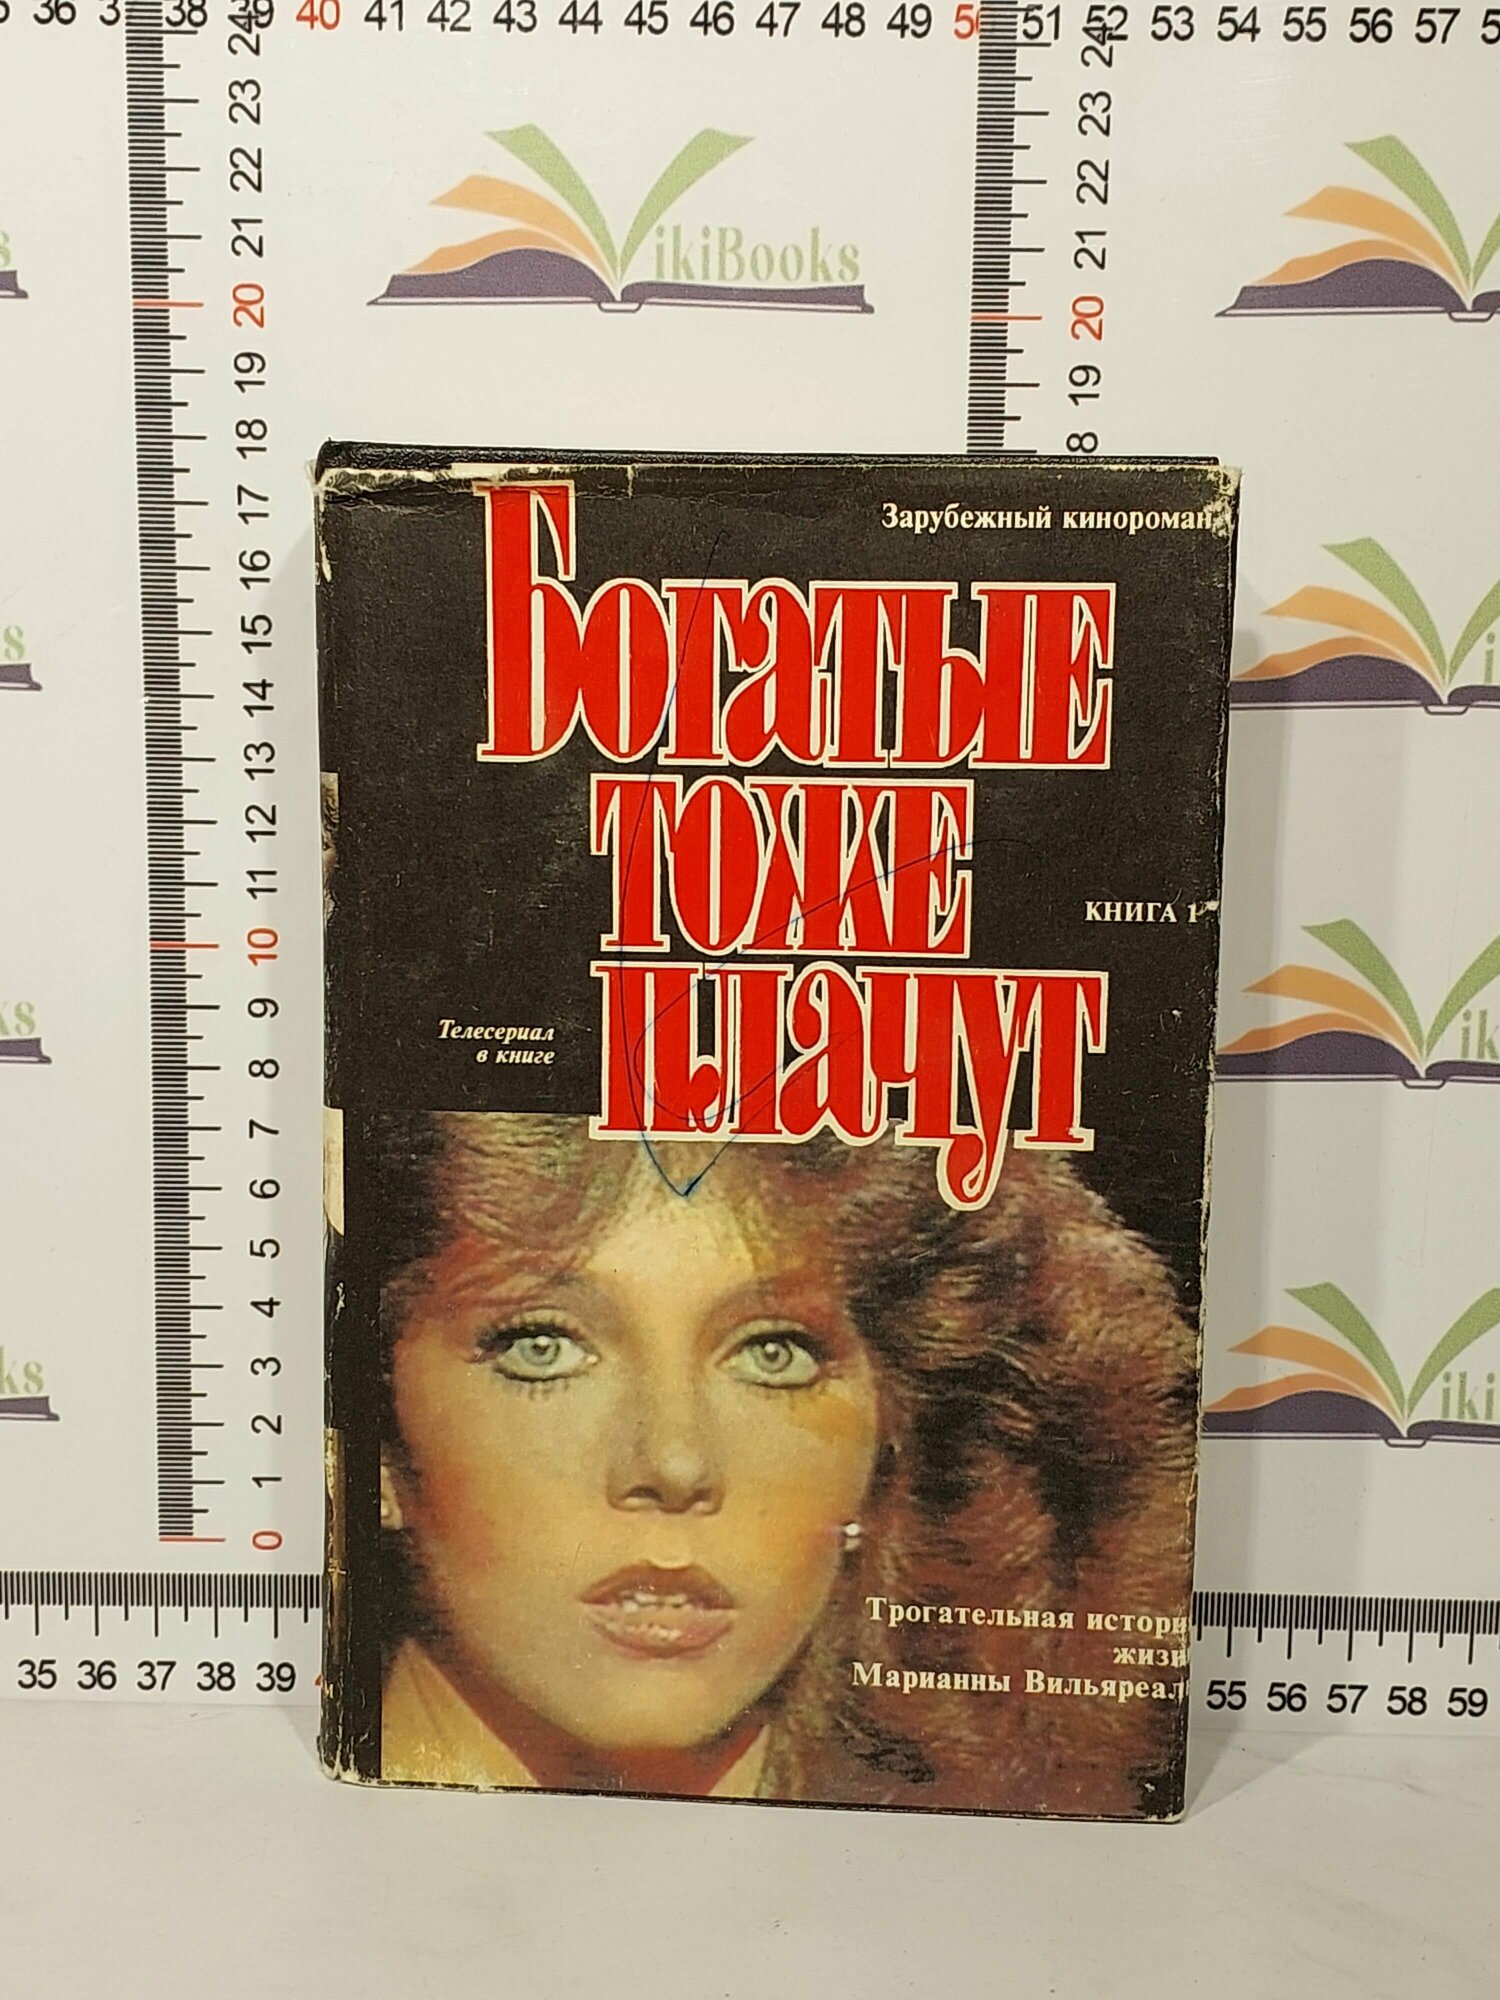 Богатые тоже плачут / Комплект из 2 книг /1992 г.